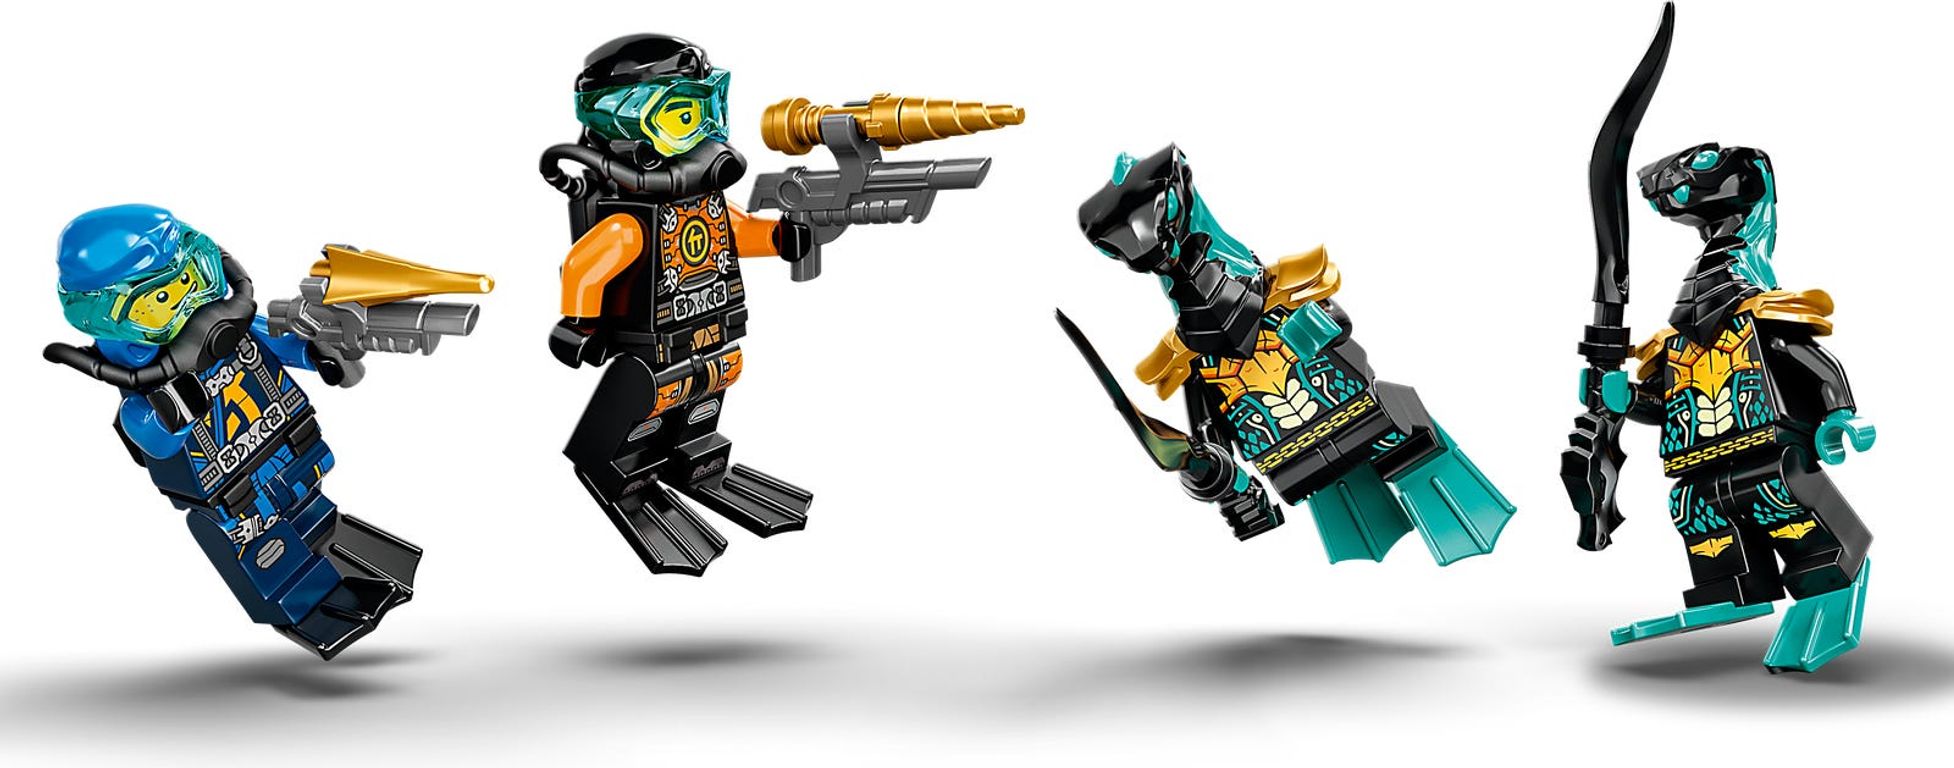 LEGO® Ninjago Ninja Sub Speeder minifigures